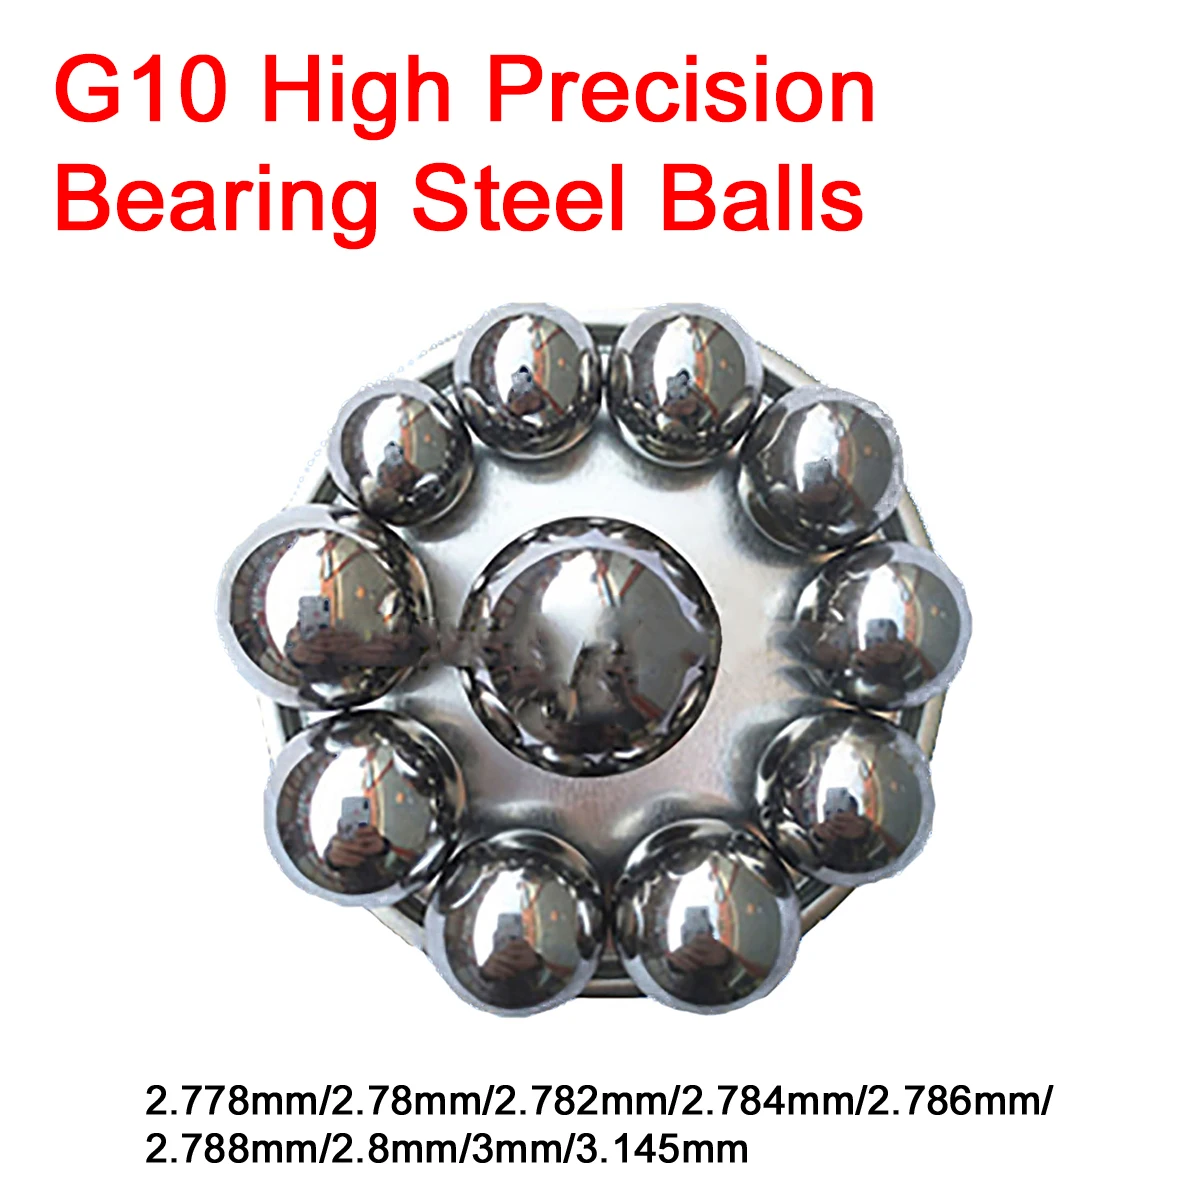 

100/500/1000Pcs G10 High Precision Bearing Steel Balls 2.778/2.78/2.782/2.784/2.786/2.788/2.8/3/3.145mm Chrome Bearing Steel